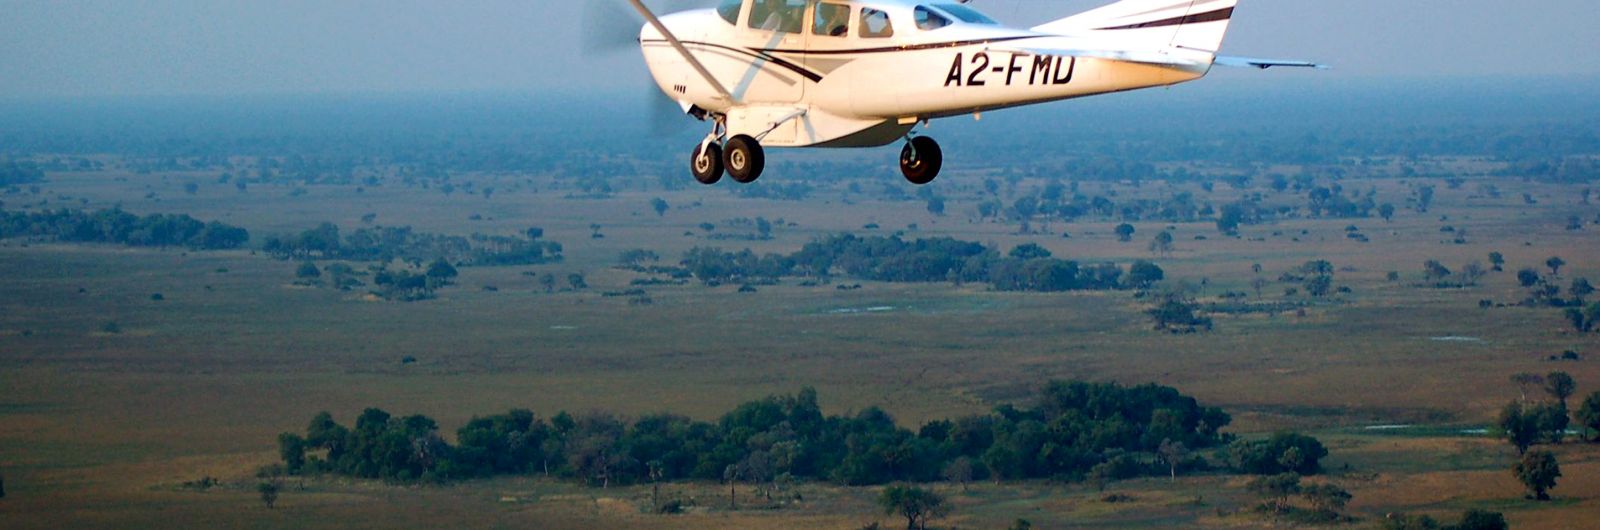 delta del okavango - avioneta